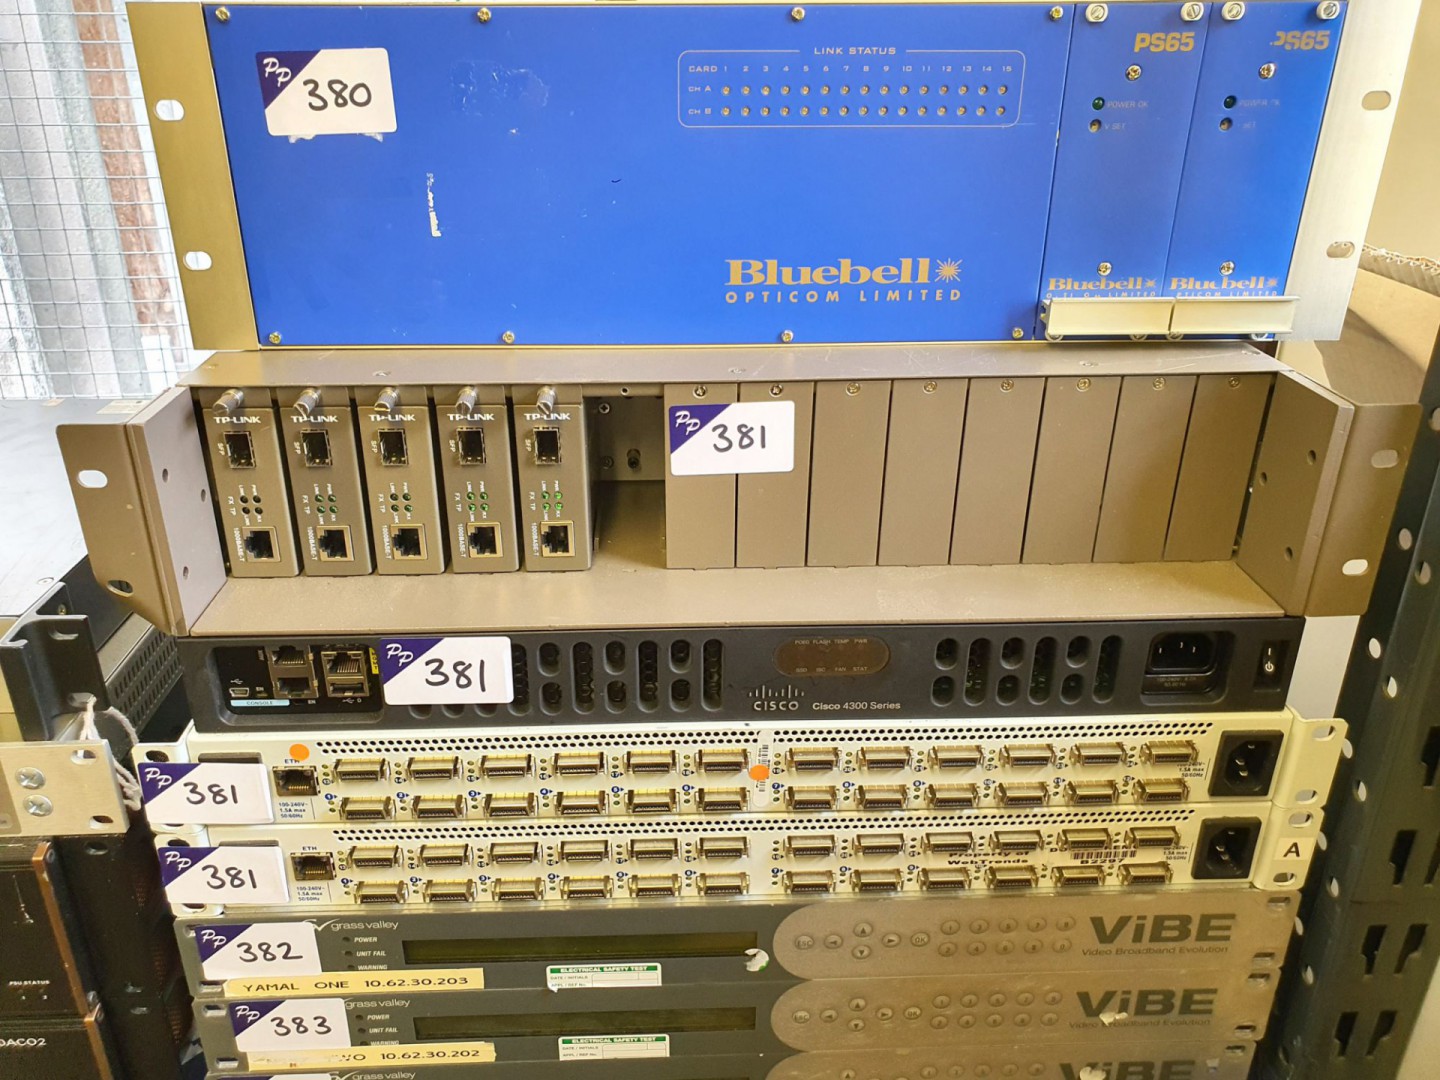 Rack type network router, Cisco 4300 series ISR ro...